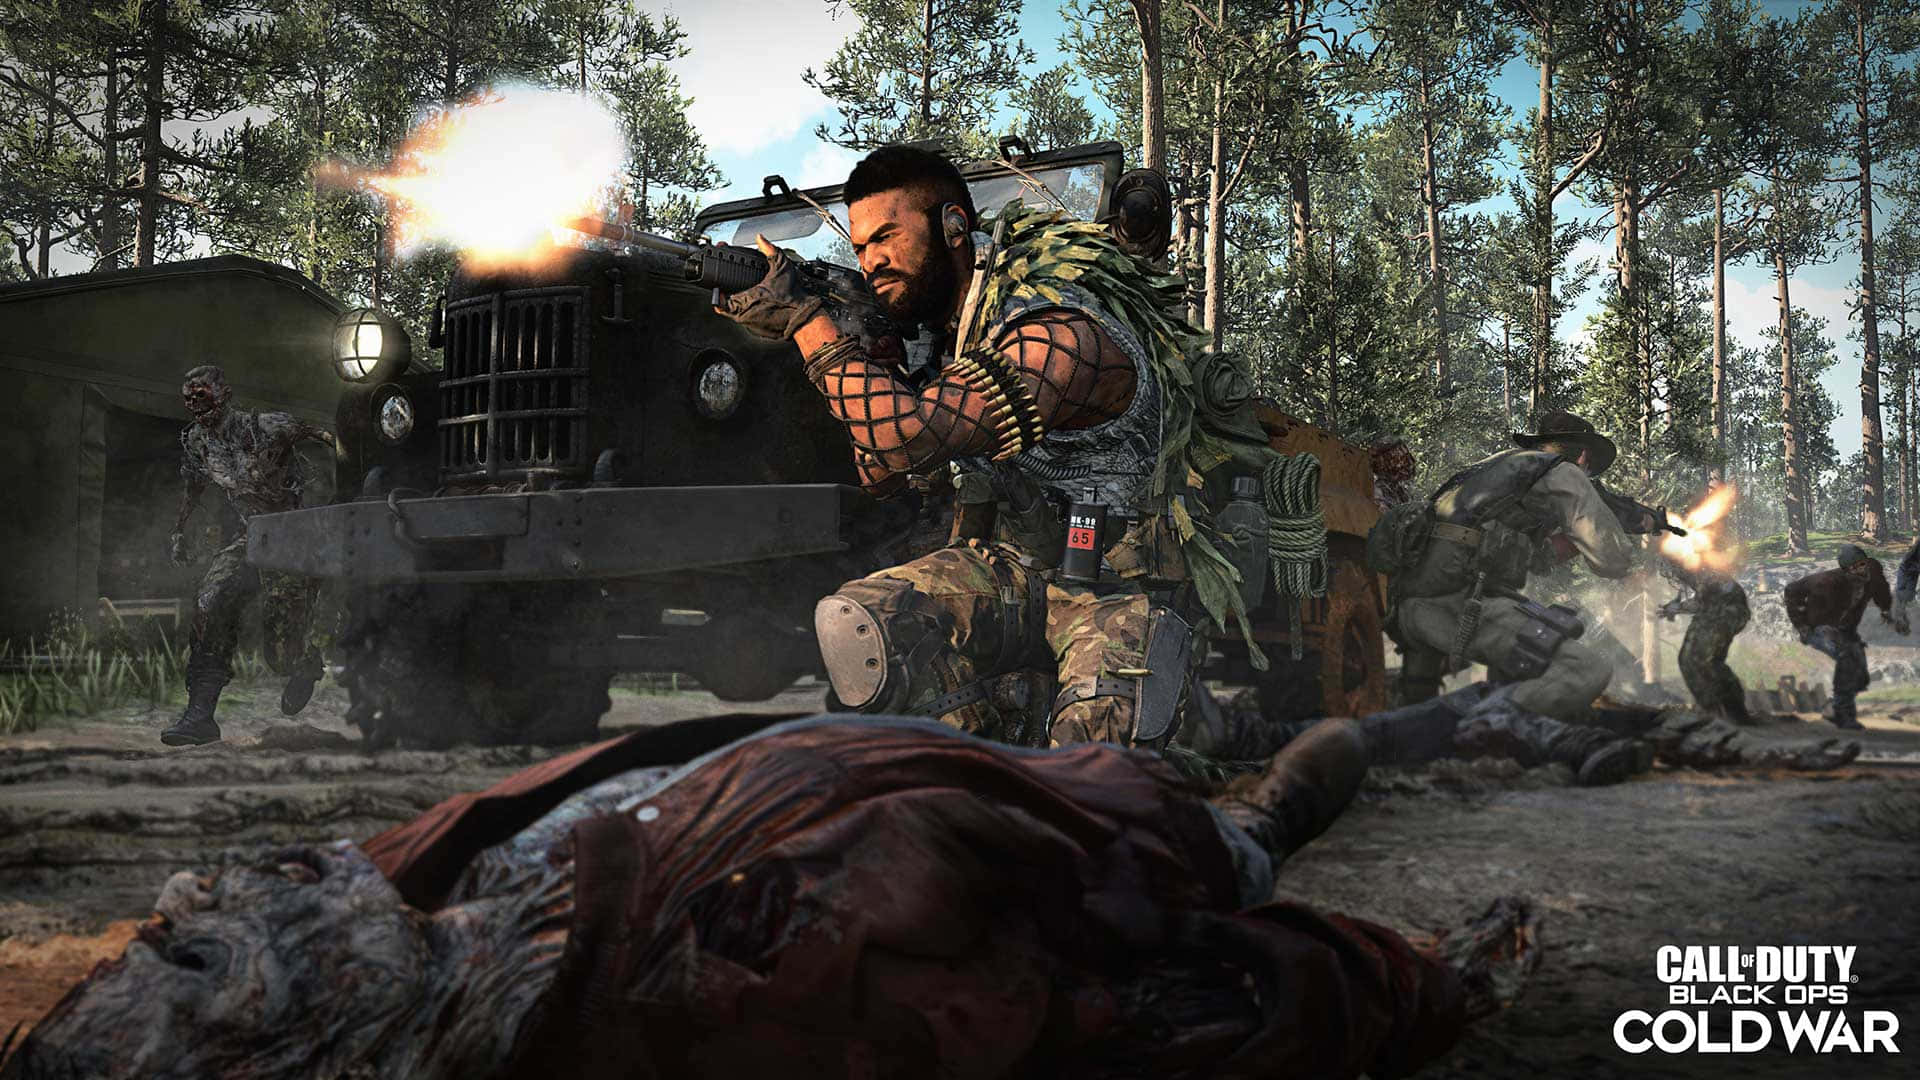 Preparatie Vivi L'emozionante Intensità Di Call Of Duty: Black Ops Cold War.